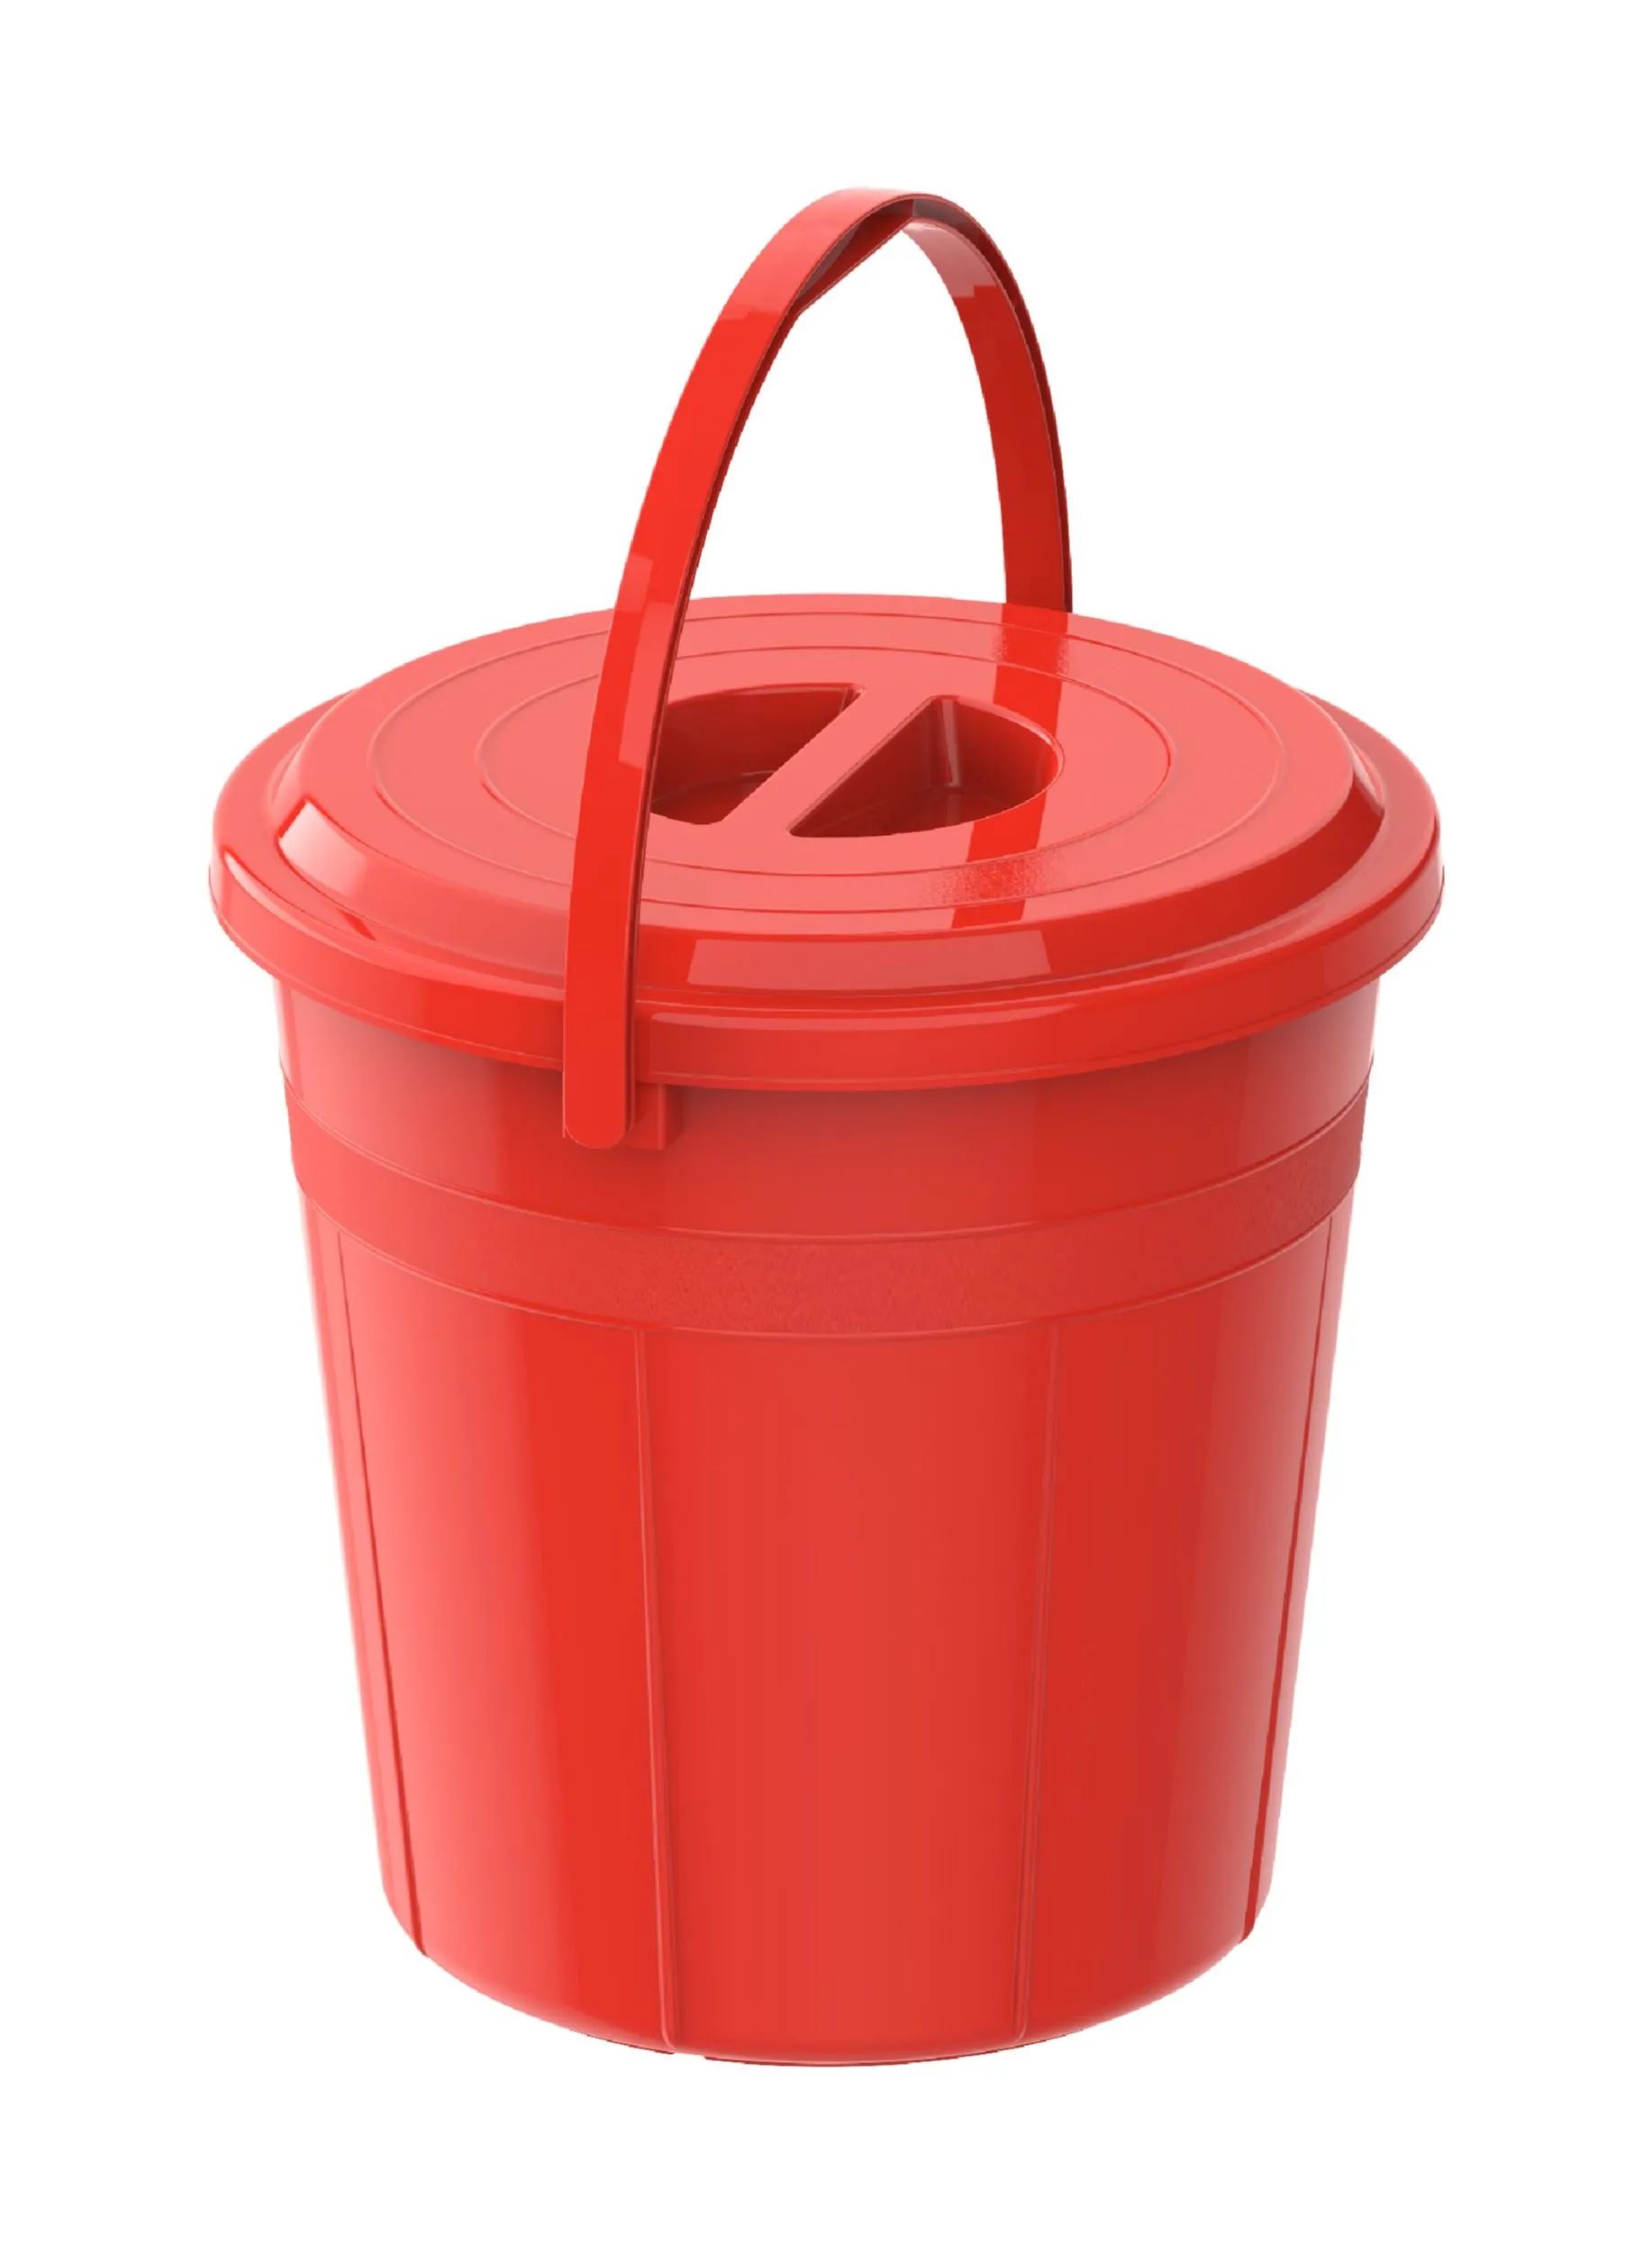 Cosmoplast DX 15L Round Plastic Bucket with Handle & Lid